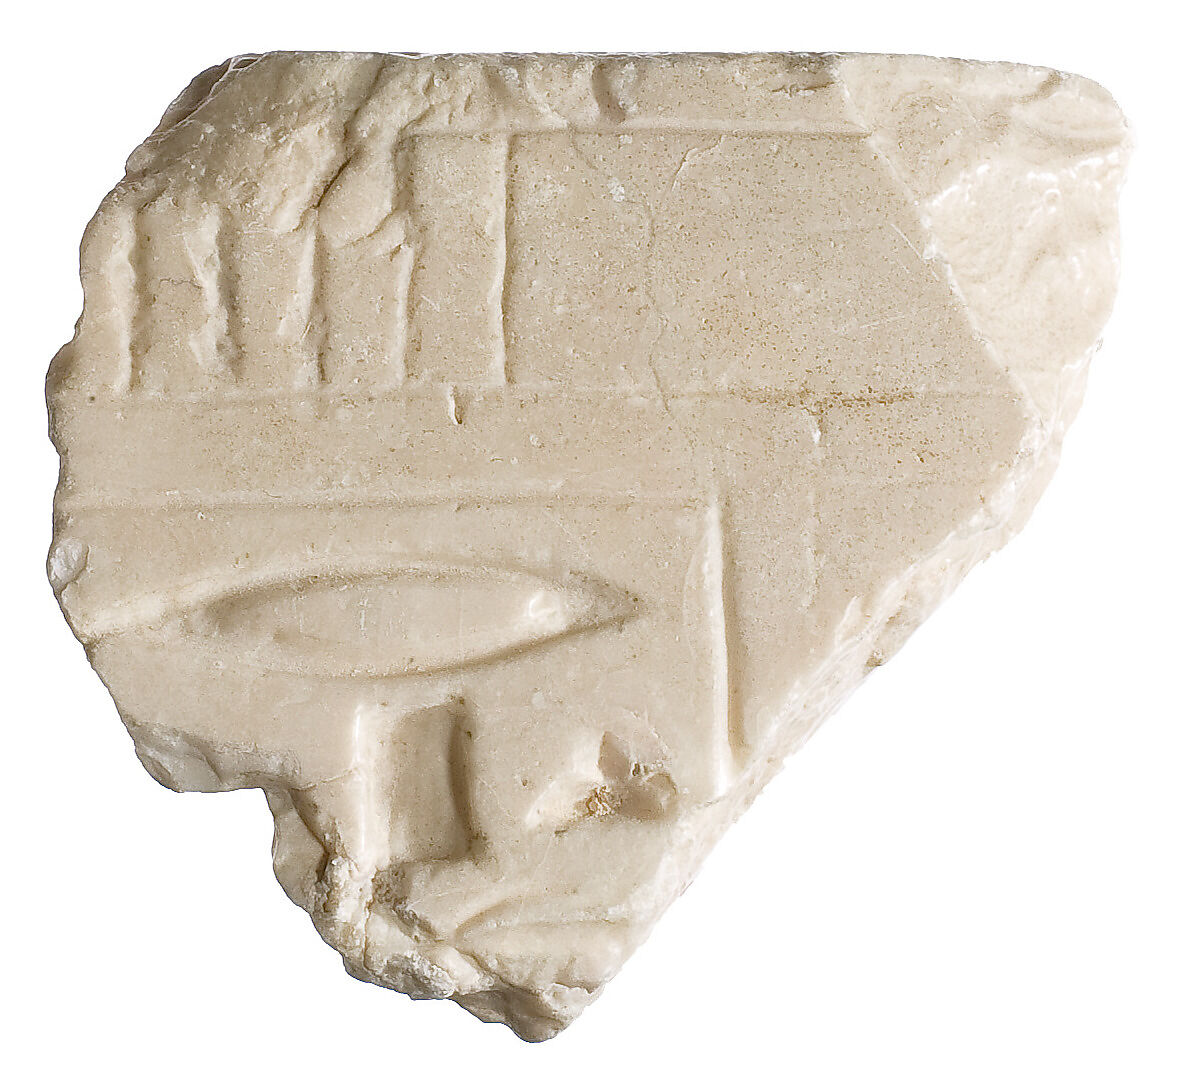 Throne block with Nefertiti titulary, border pattern, Indurated limestone 